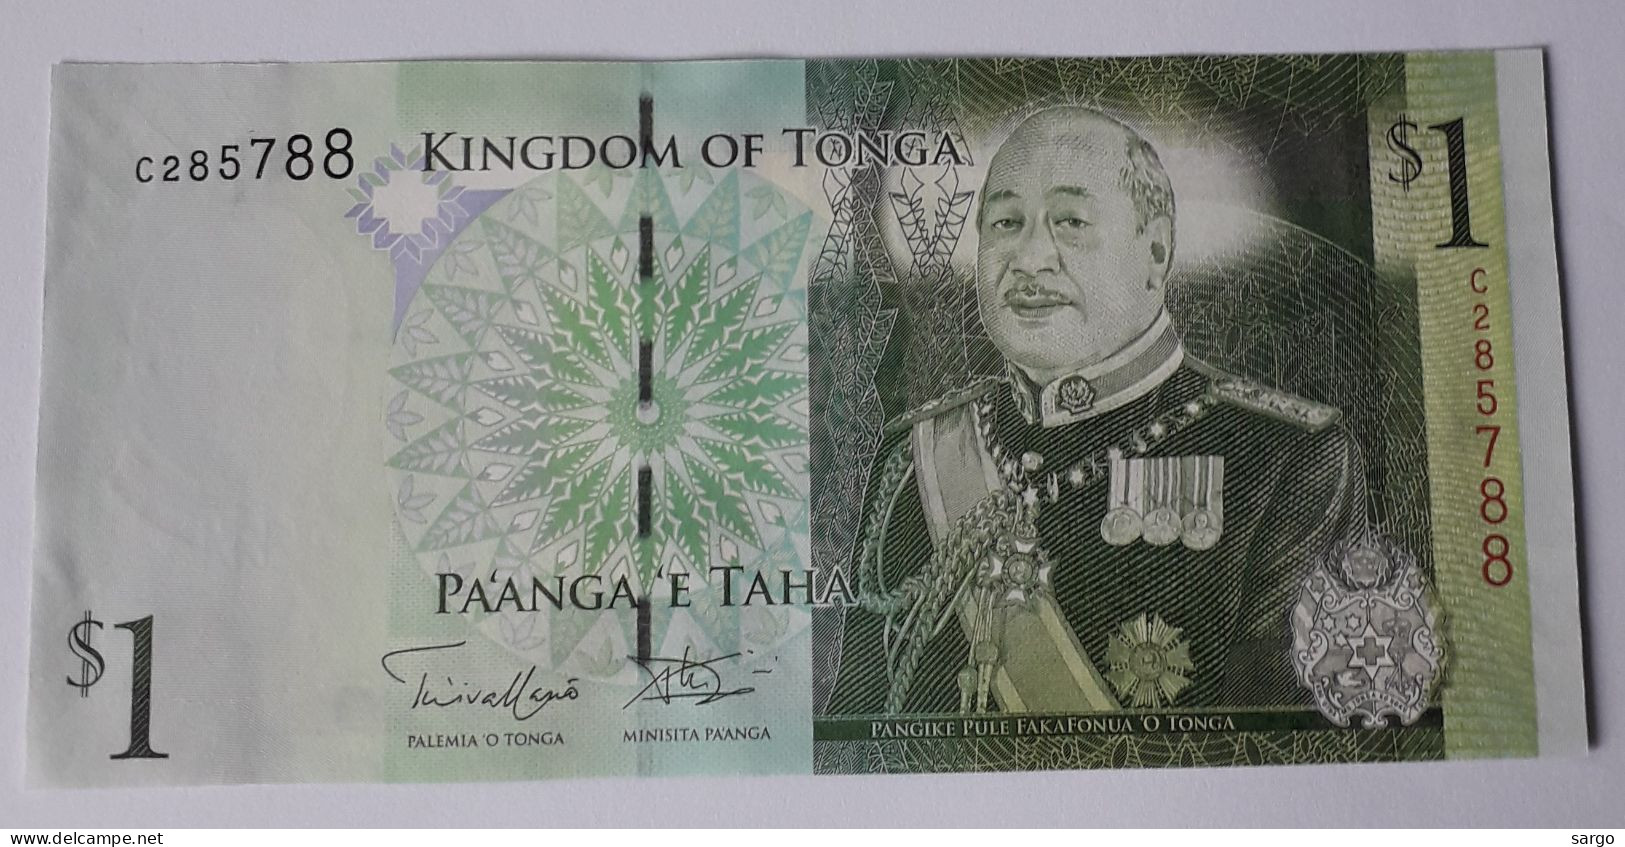 TONGA  - 1 PA'ANGA  - P 37  (2009) - UNC -  BANKNOTES - PAPER MONEY - SIGNATURE 2 - - Tonga